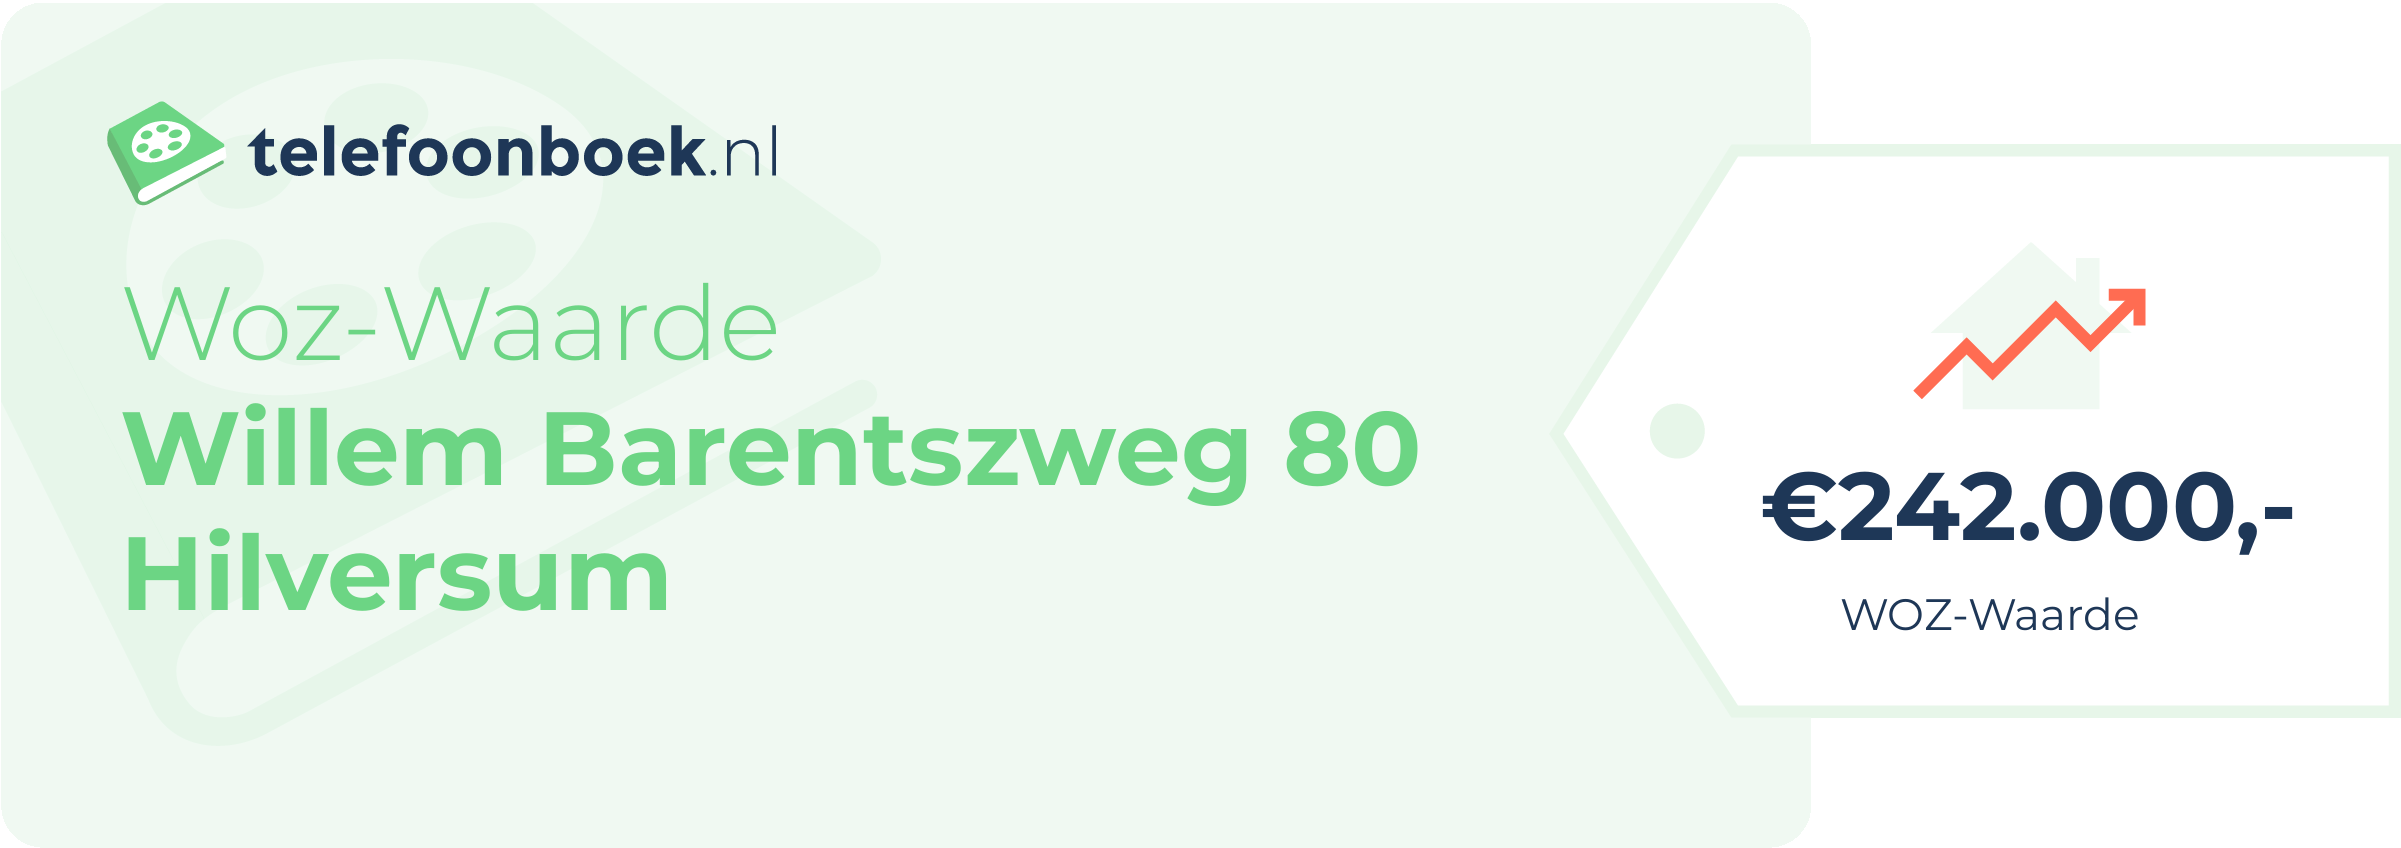 WOZ-waarde Willem Barentszweg 80 Hilversum